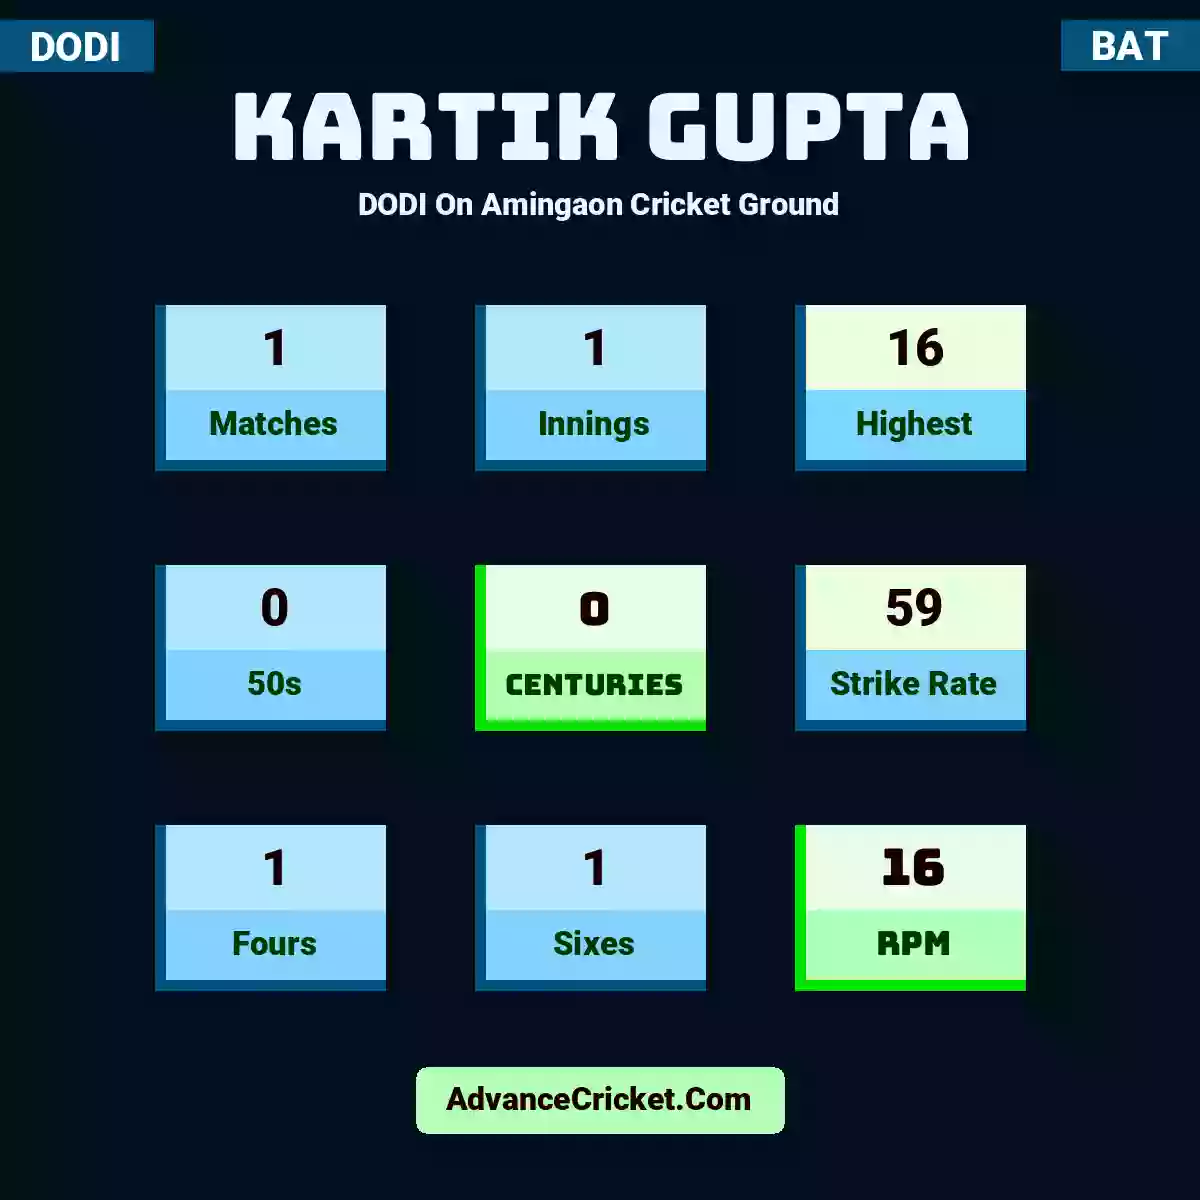 Kartik Gupta DODI  On Amingaon Cricket Ground, Kartik Gupta played 1 matches, scored 16 runs as highest, 0 half-centuries, and 0 centuries, with a strike rate of 59. K.Gupta hit 1 fours and 1 sixes, with an RPM of 16.